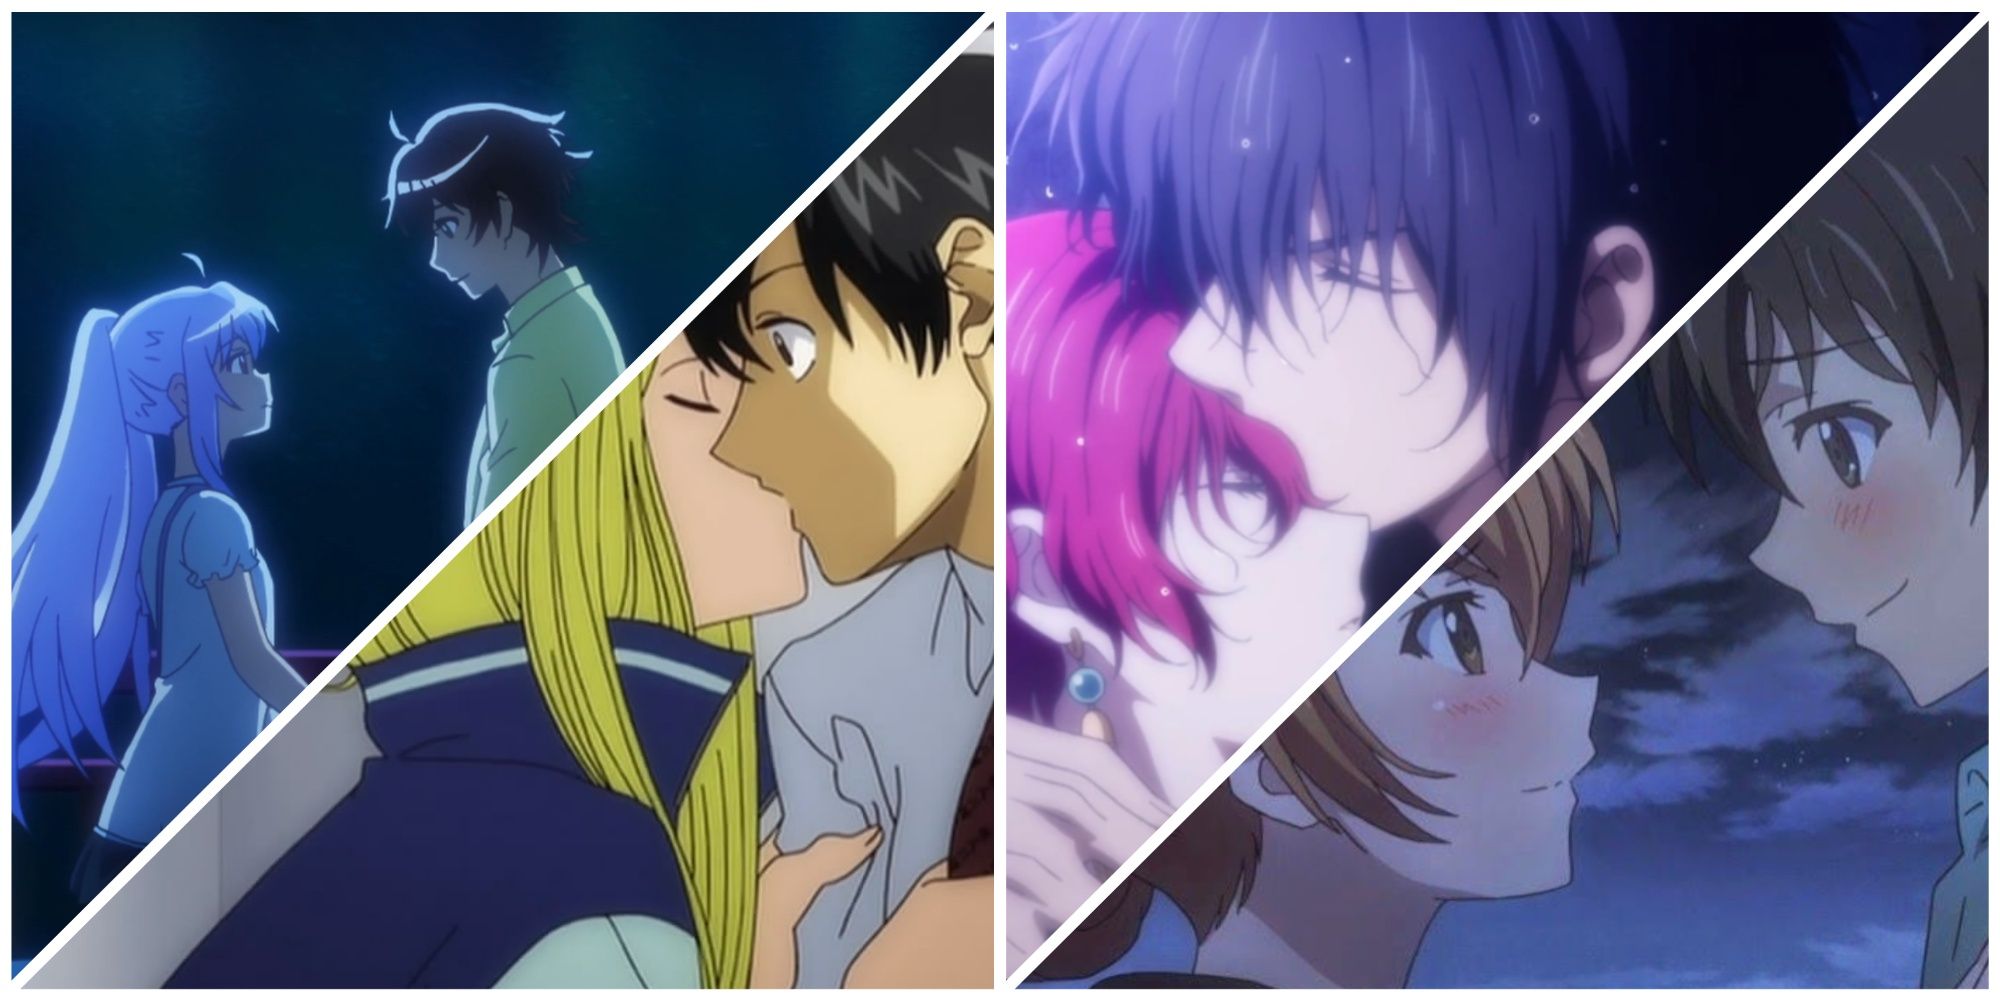 Best Romance Anime Not Set In High School